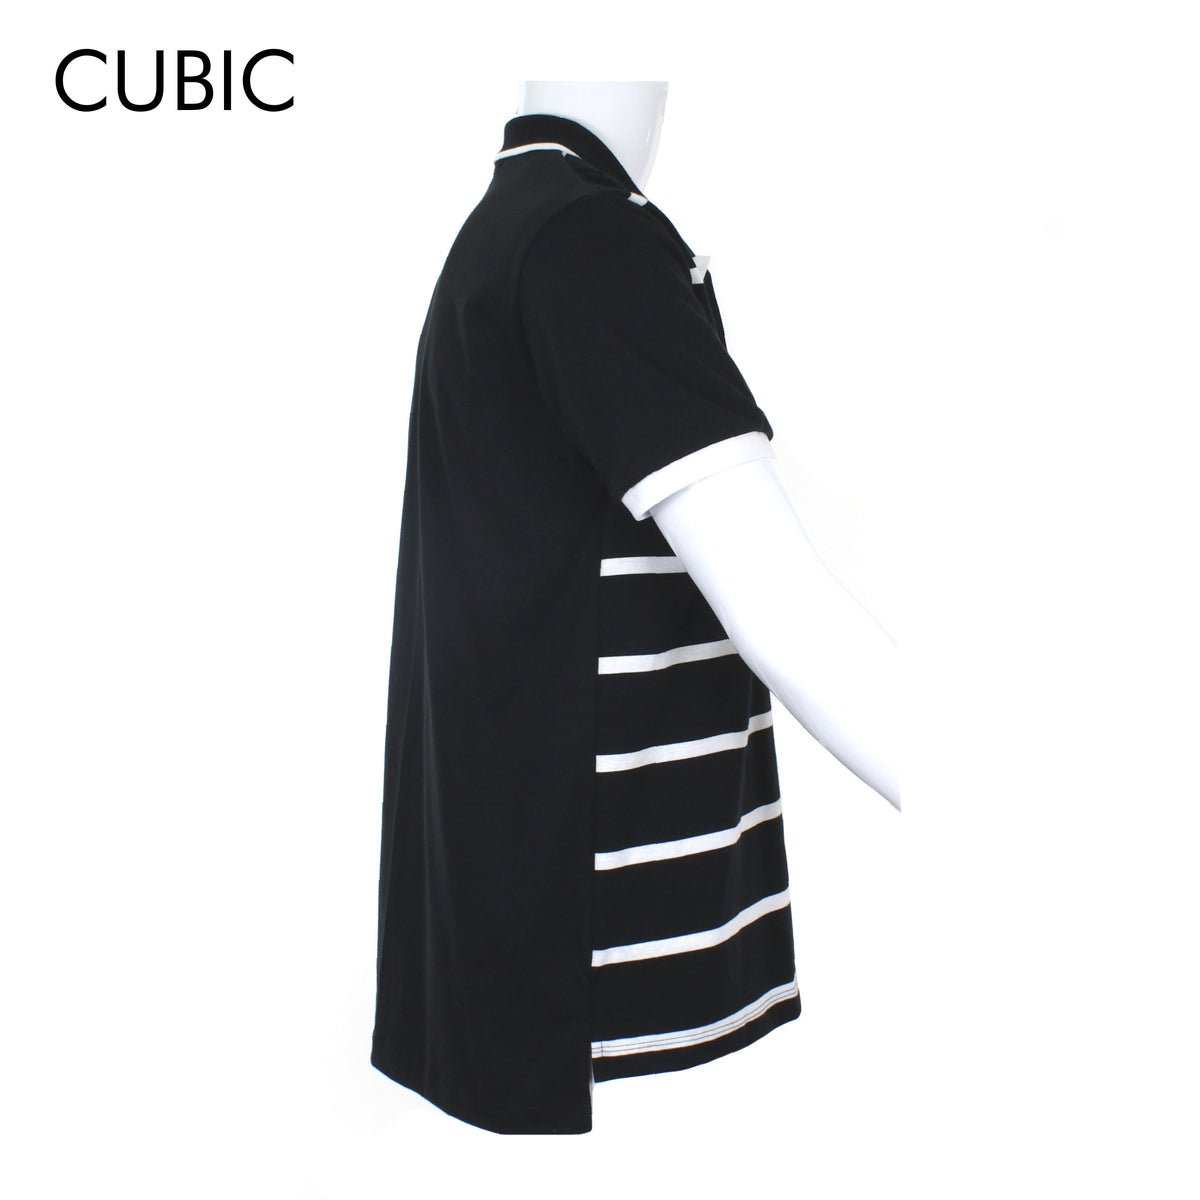 Cubic Mens Stripes  Polo Shirt Polo-shirt Collar Top Top for Men - CMS2326C